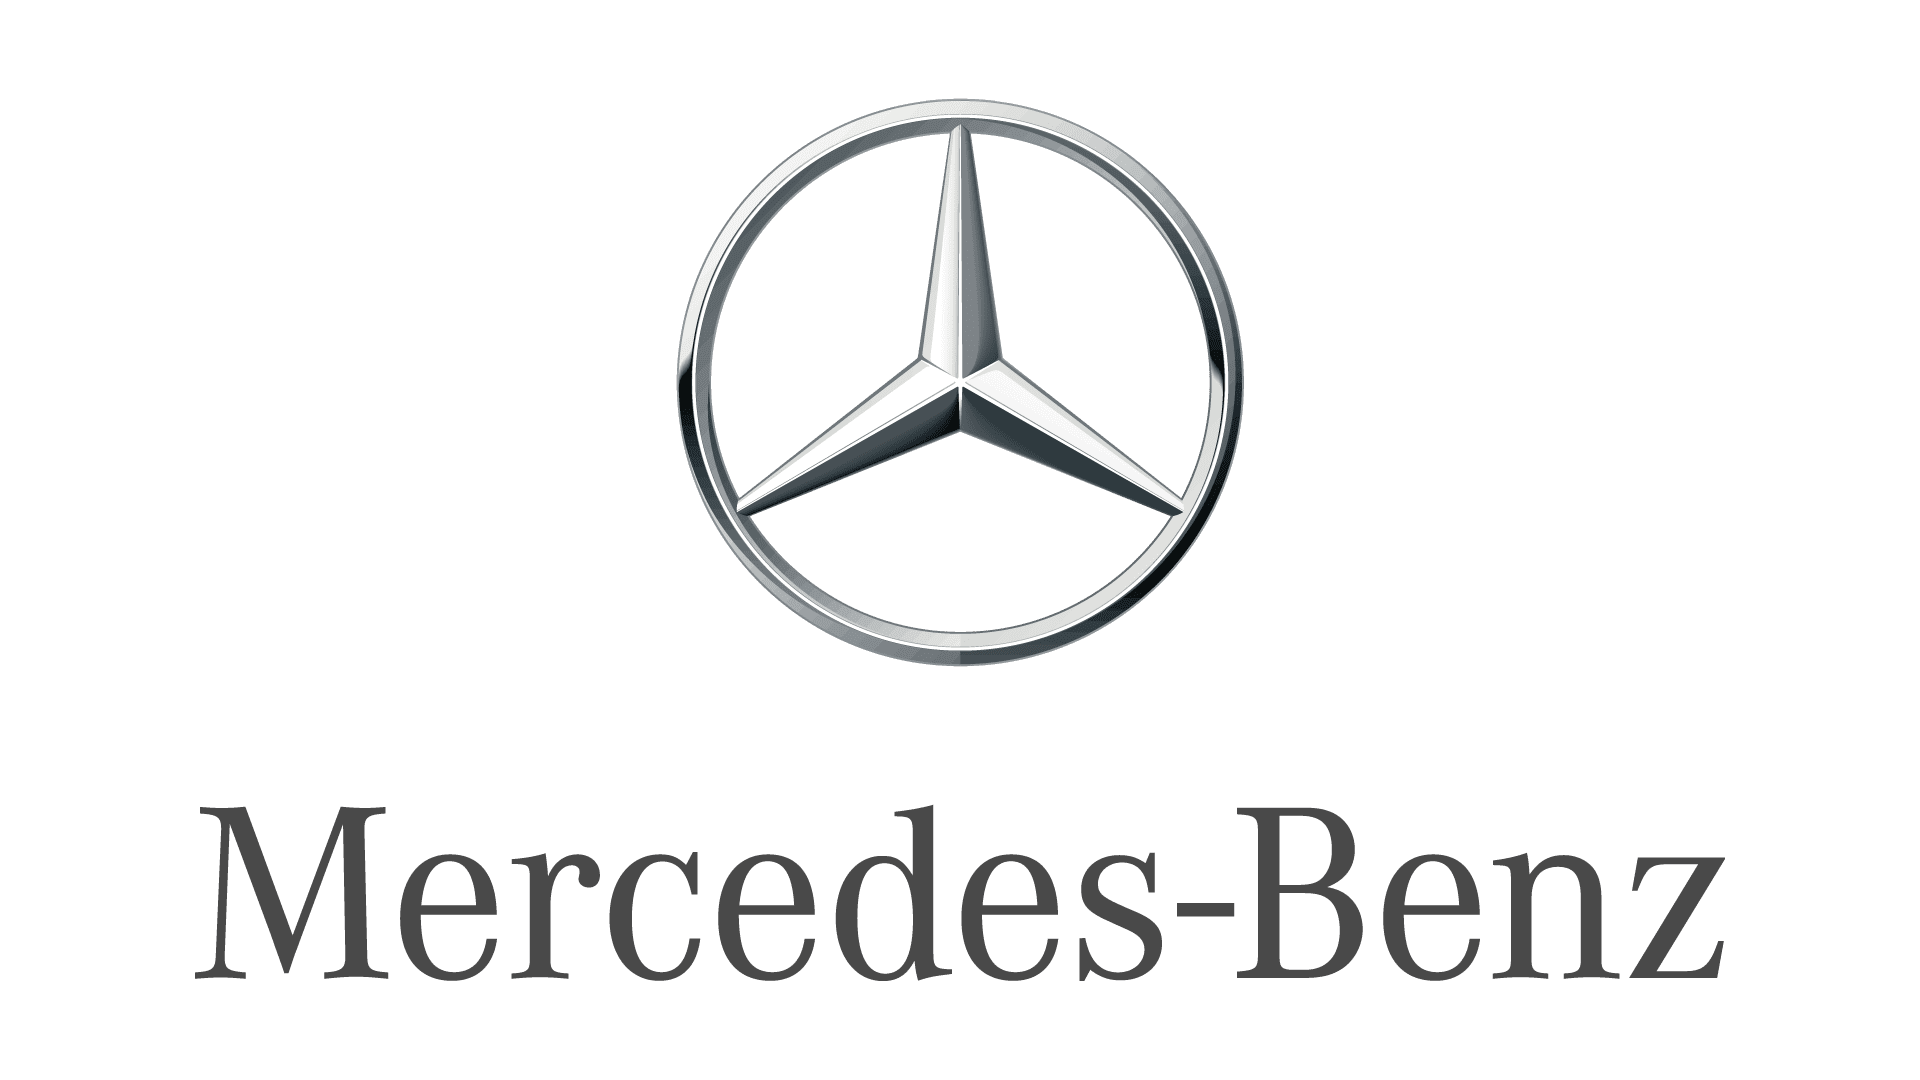 Комфорт Mercedes-Benz C-class Купе Пакети обладнання функцій комфорту #4